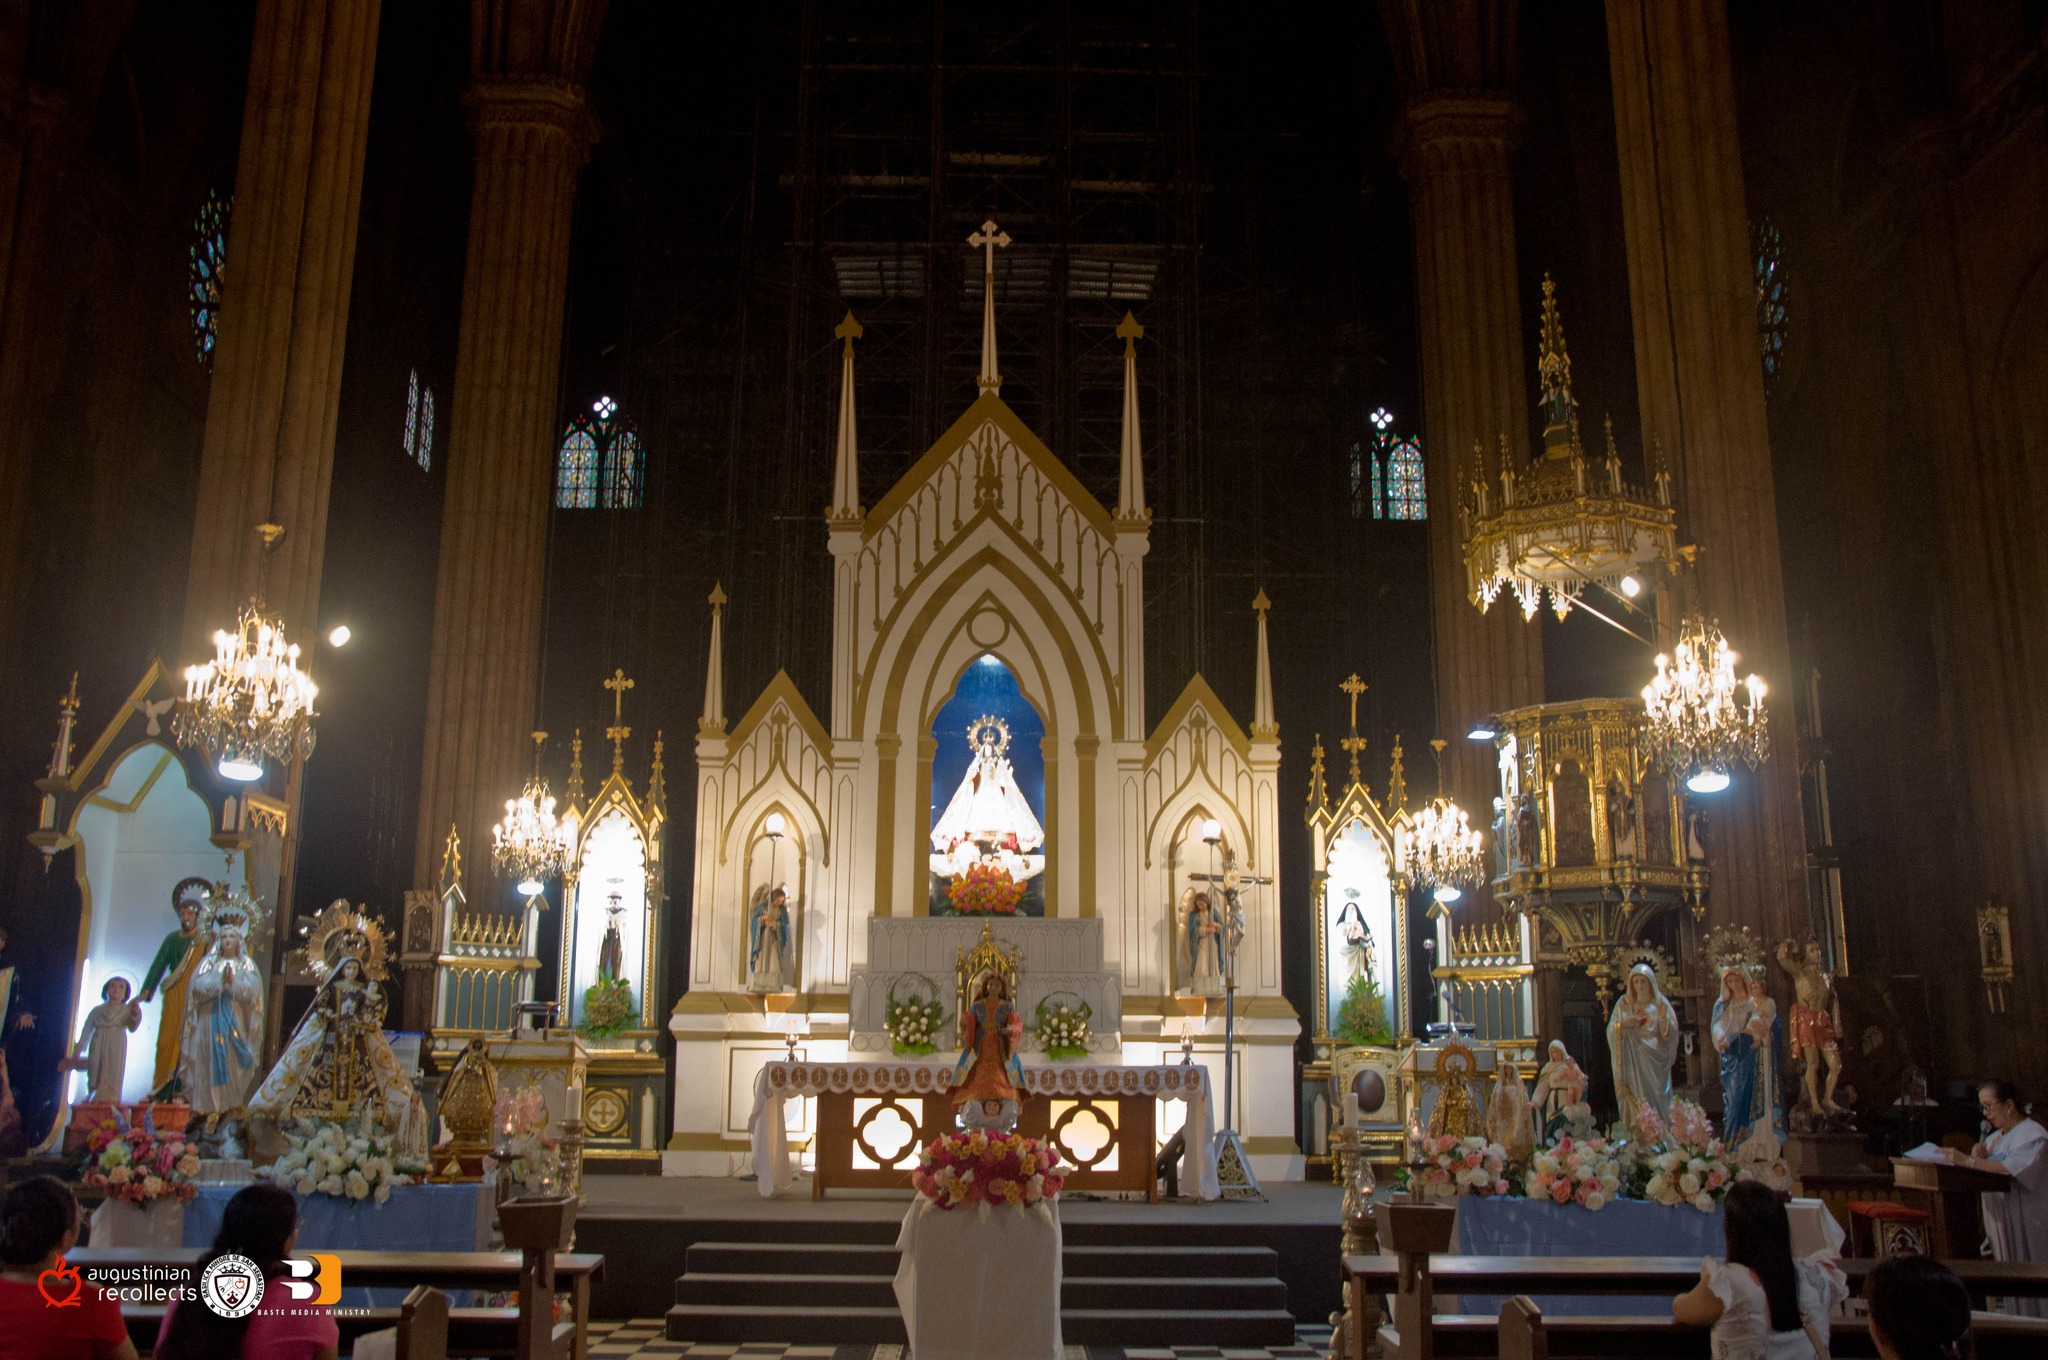 Recognized as a world monument, the San Sebastian church became a spot for Visita Iglesia in Manila.